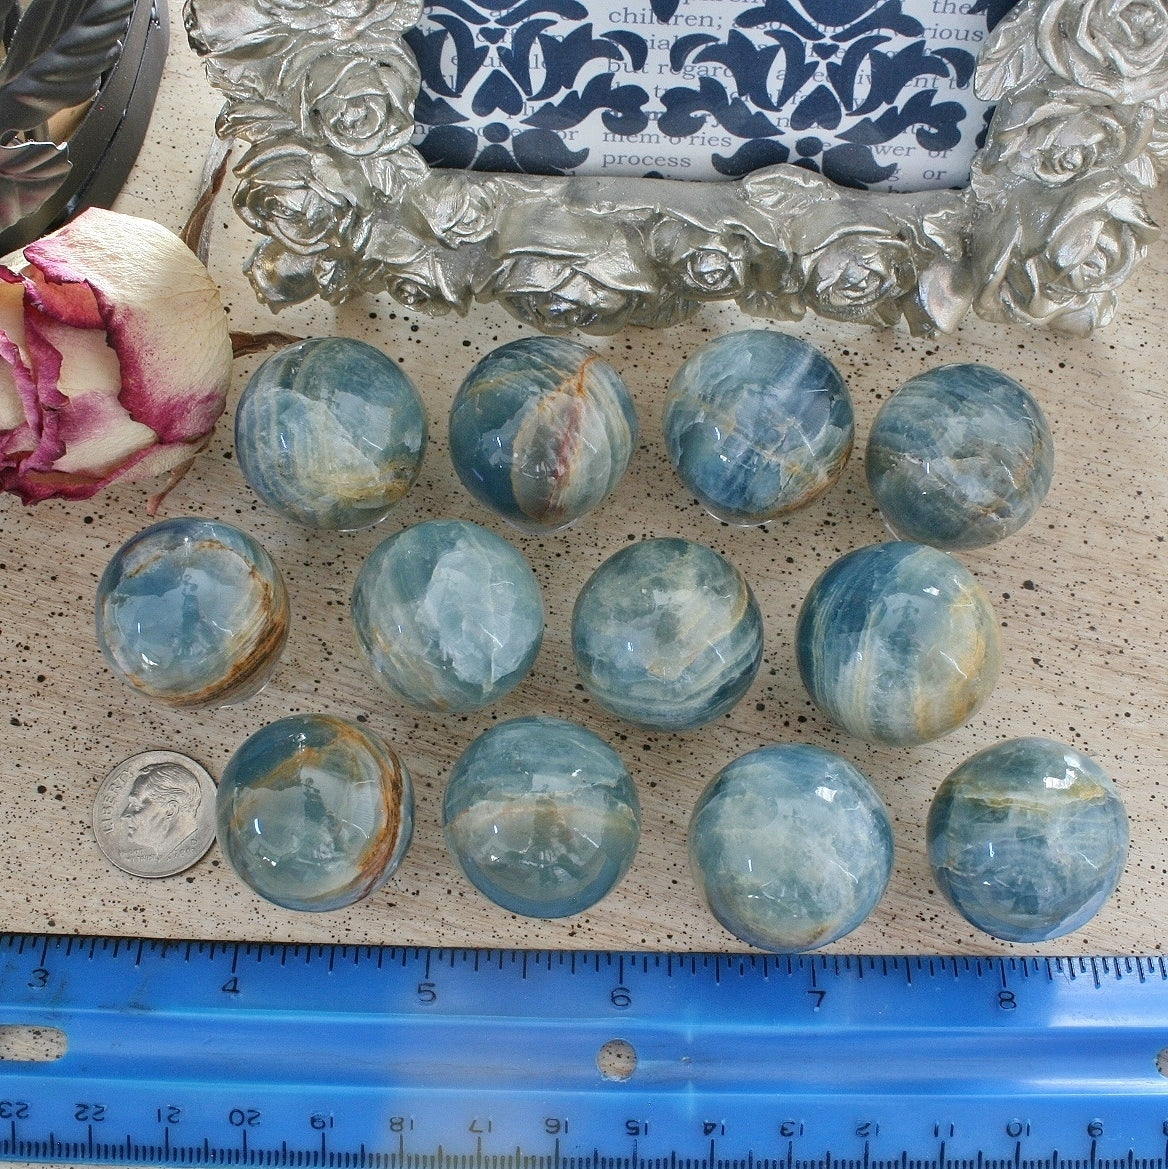 Blue Calcite / Blue Onyx Sphere from Argentina, also called Lemurian Aquatine Calcite, LGSP2